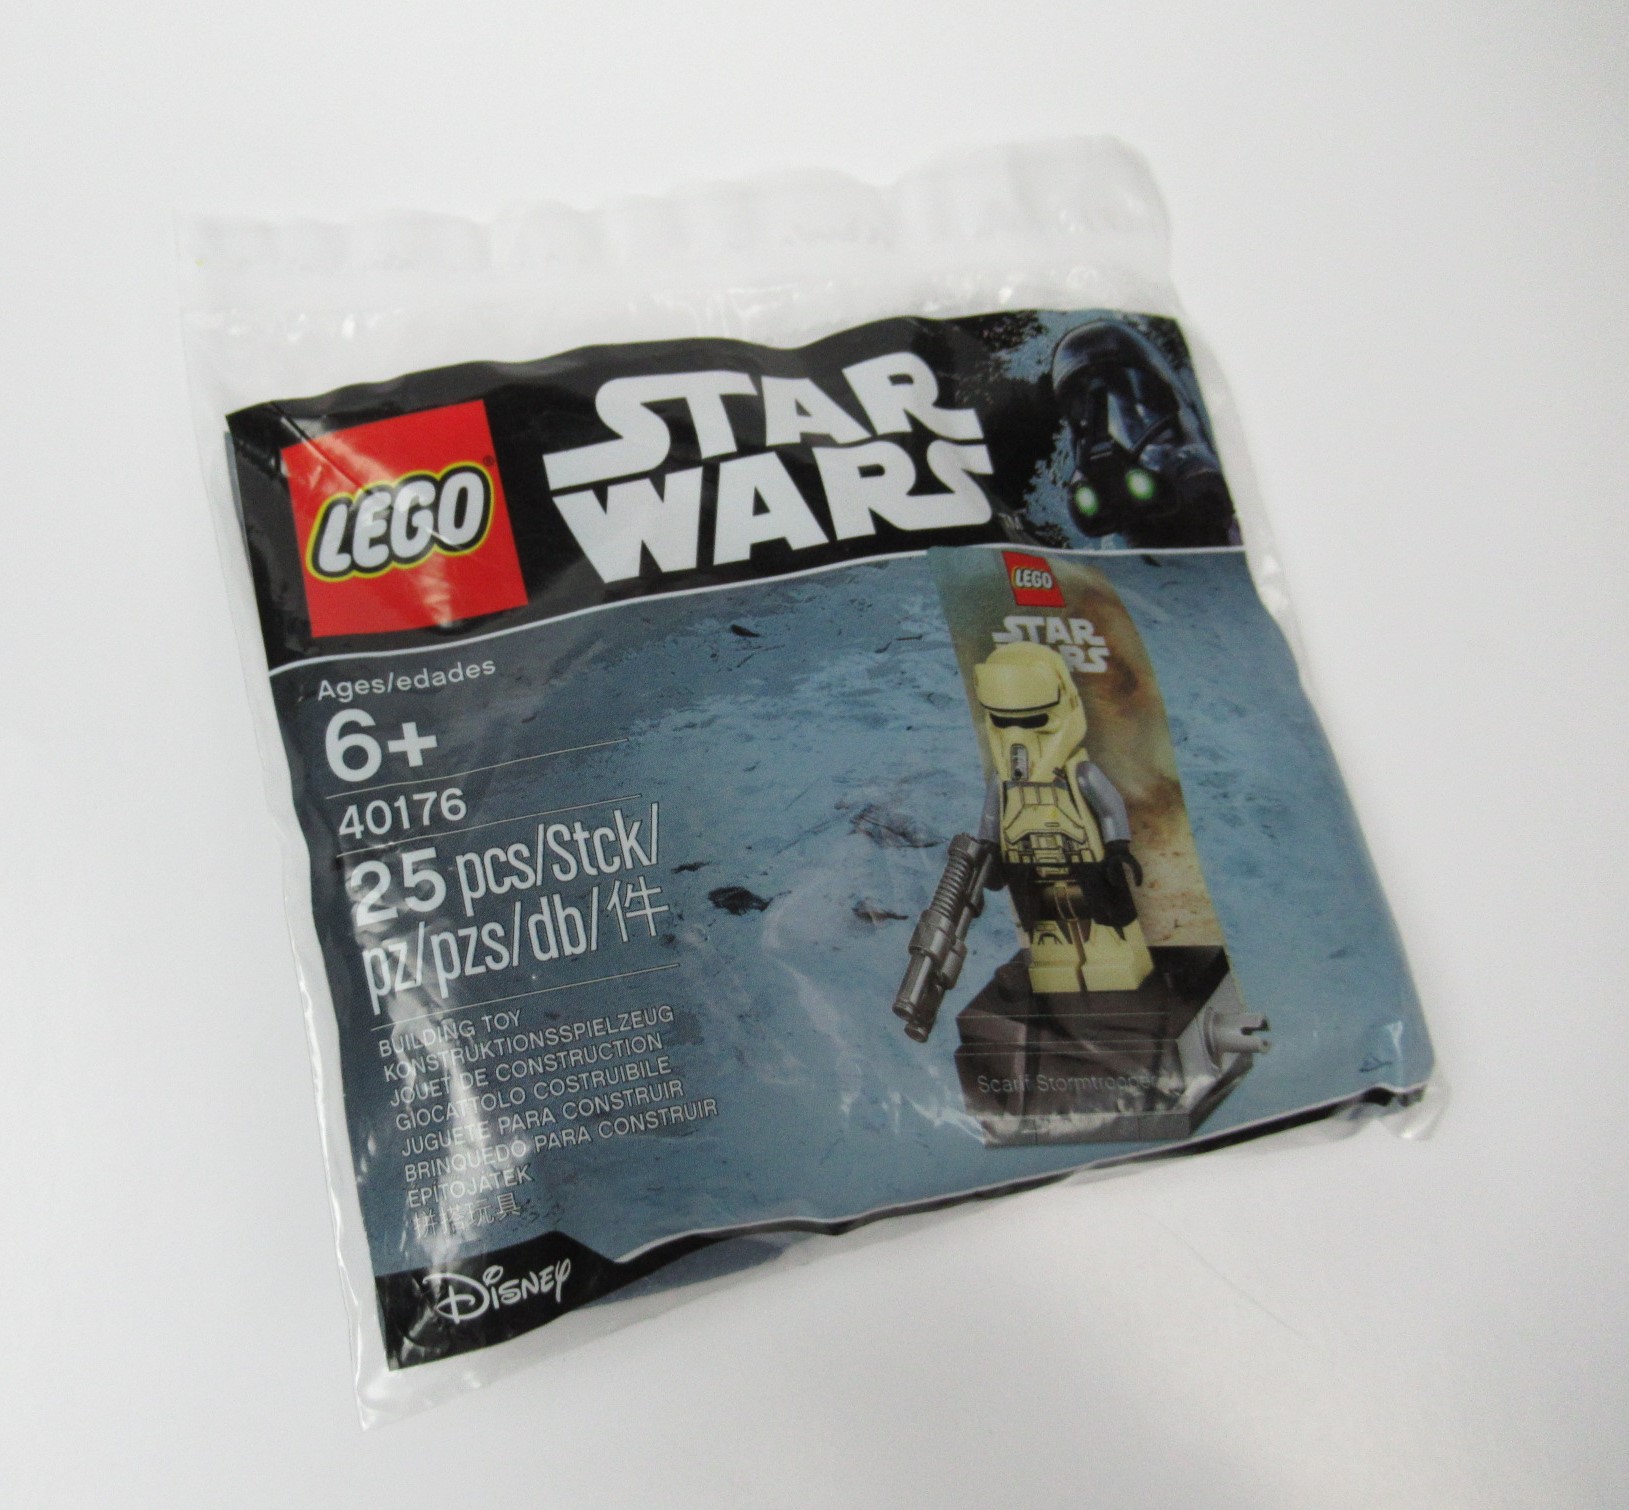 Obraz LEGO® Star Wars 40176 Star Wars Scarif Stormtrooper Polybag